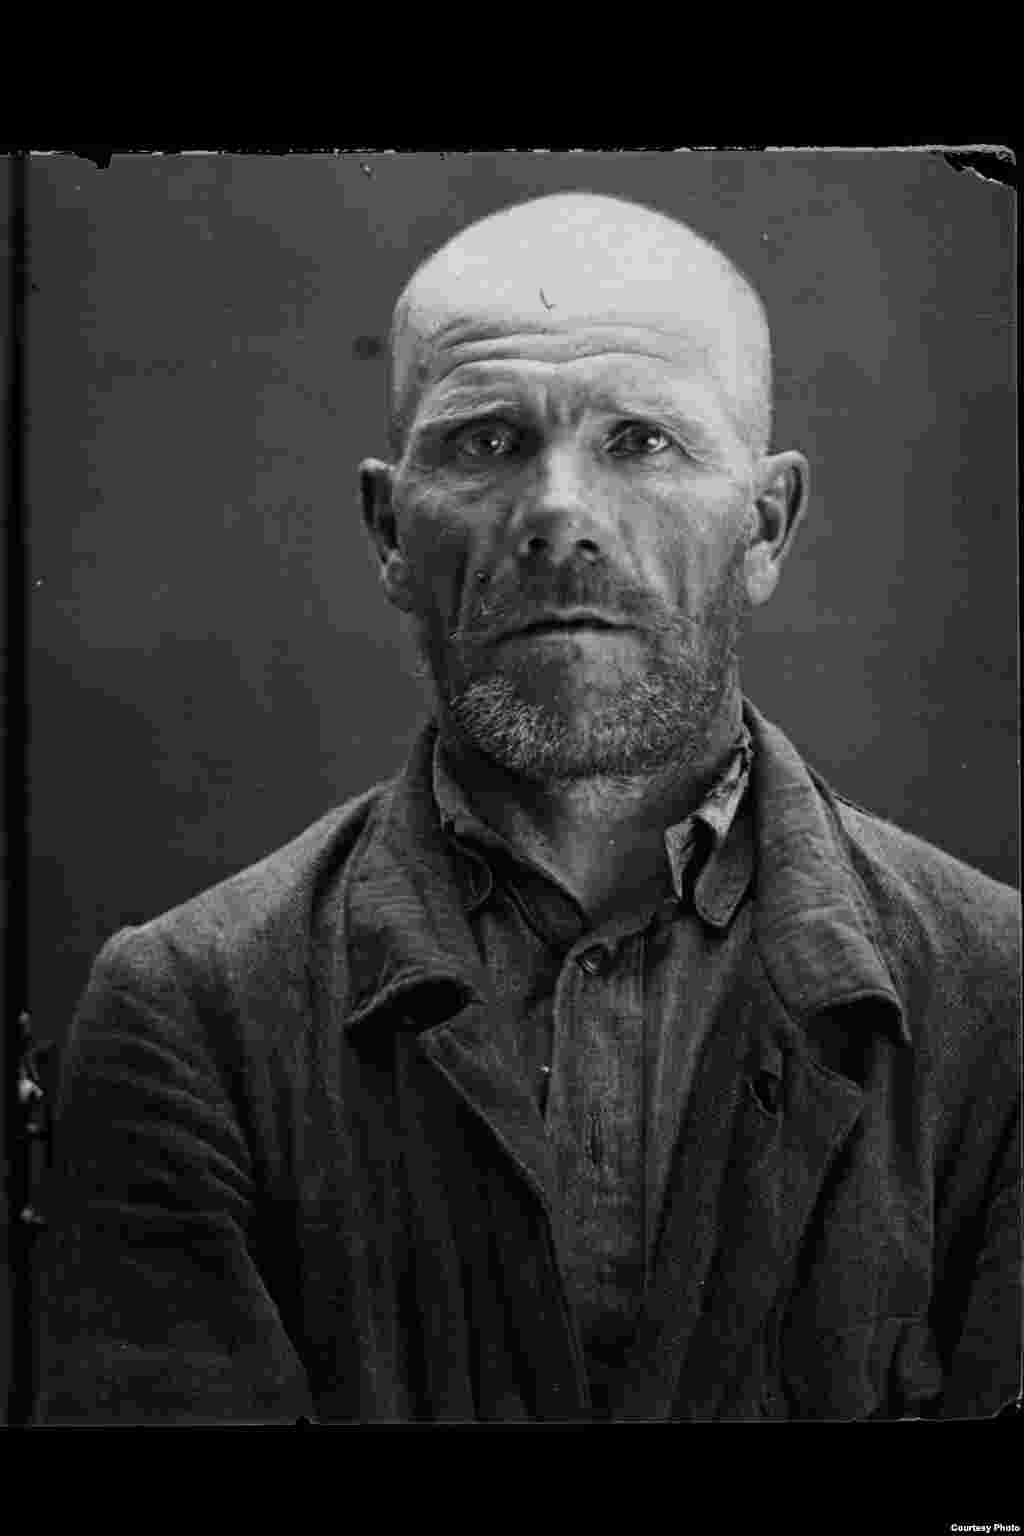 Gavrill Sergeyevich Bogdanov: Rus; i lindur n&euml; vitin 1888 n&euml; fshatin Aminevo. U arrestua nw gusht t&euml; vitit 1937, dhe po k&euml;t&euml; muaj u ekzekutua.&nbsp;